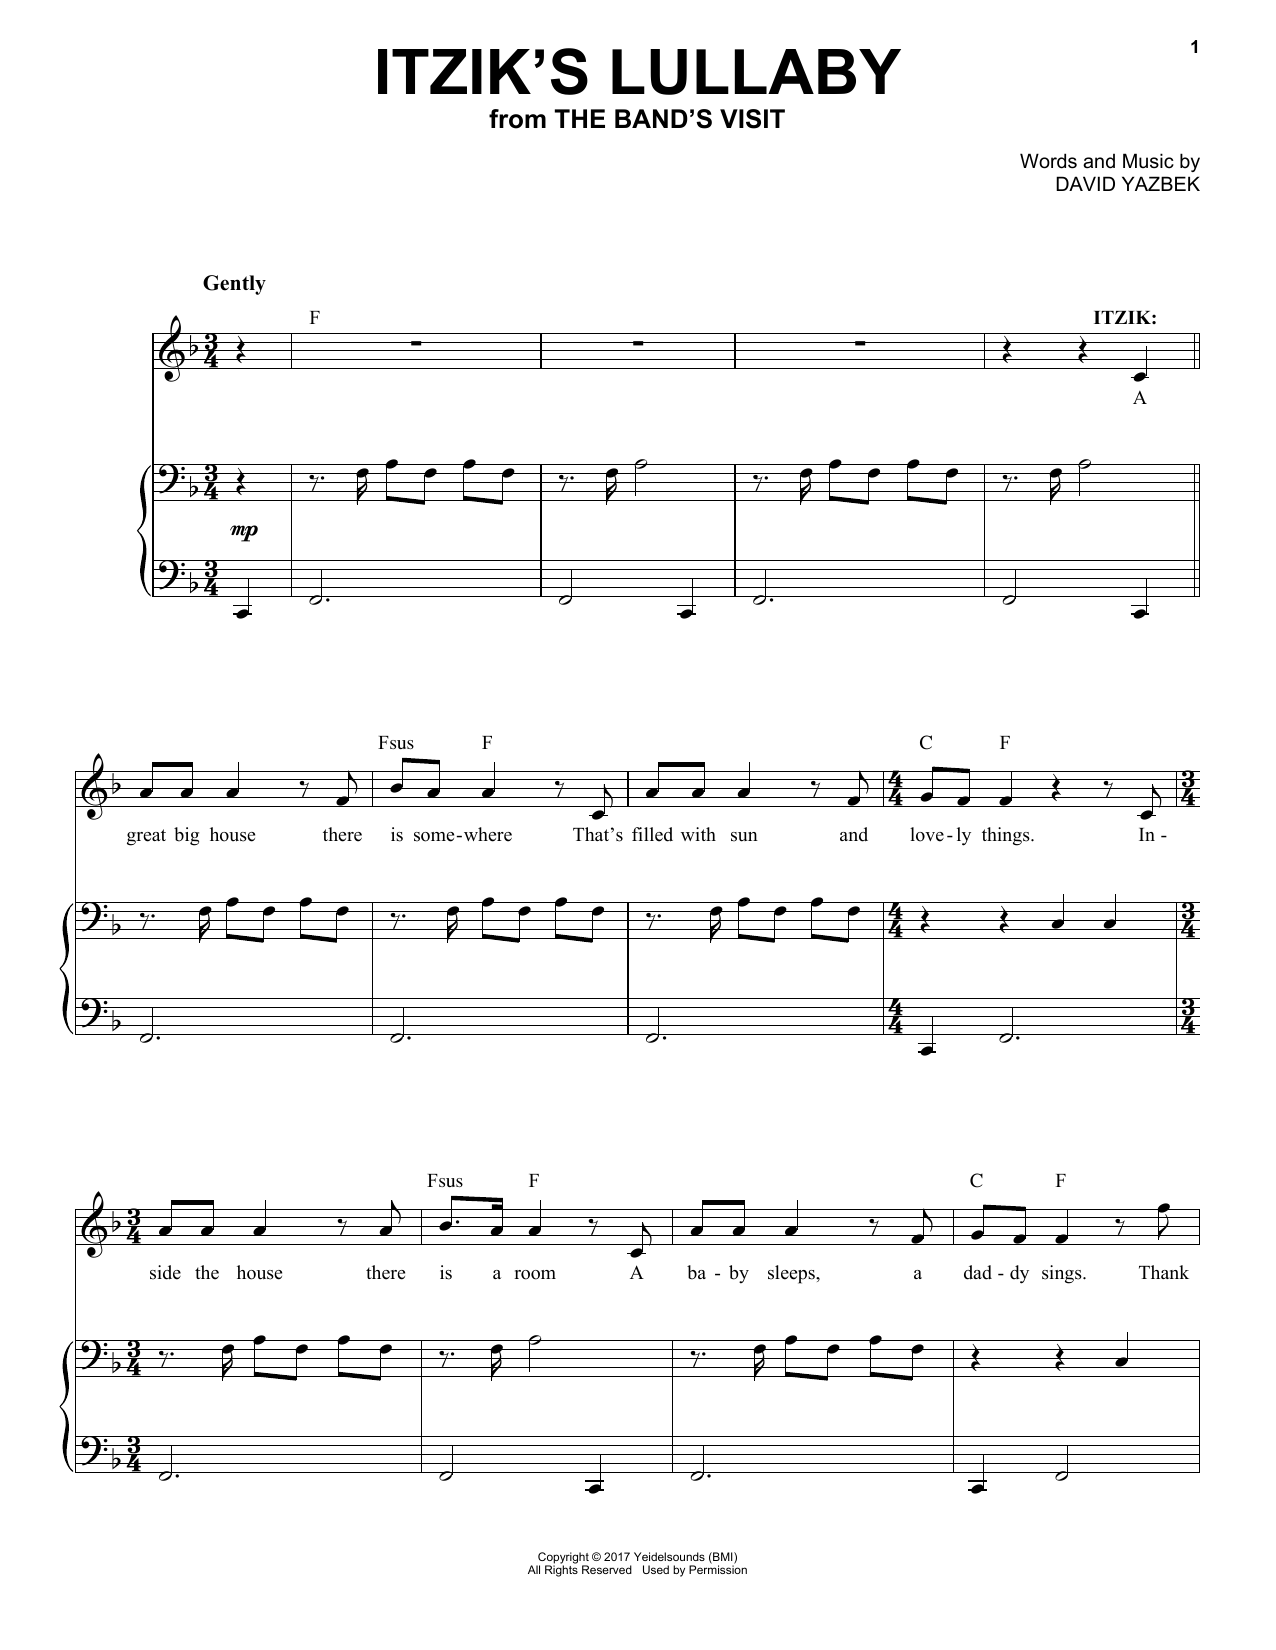 David Yazbek Itzik's Lullaby Sheet Music Notes & Chords for Piano & Vocal - Download or Print PDF